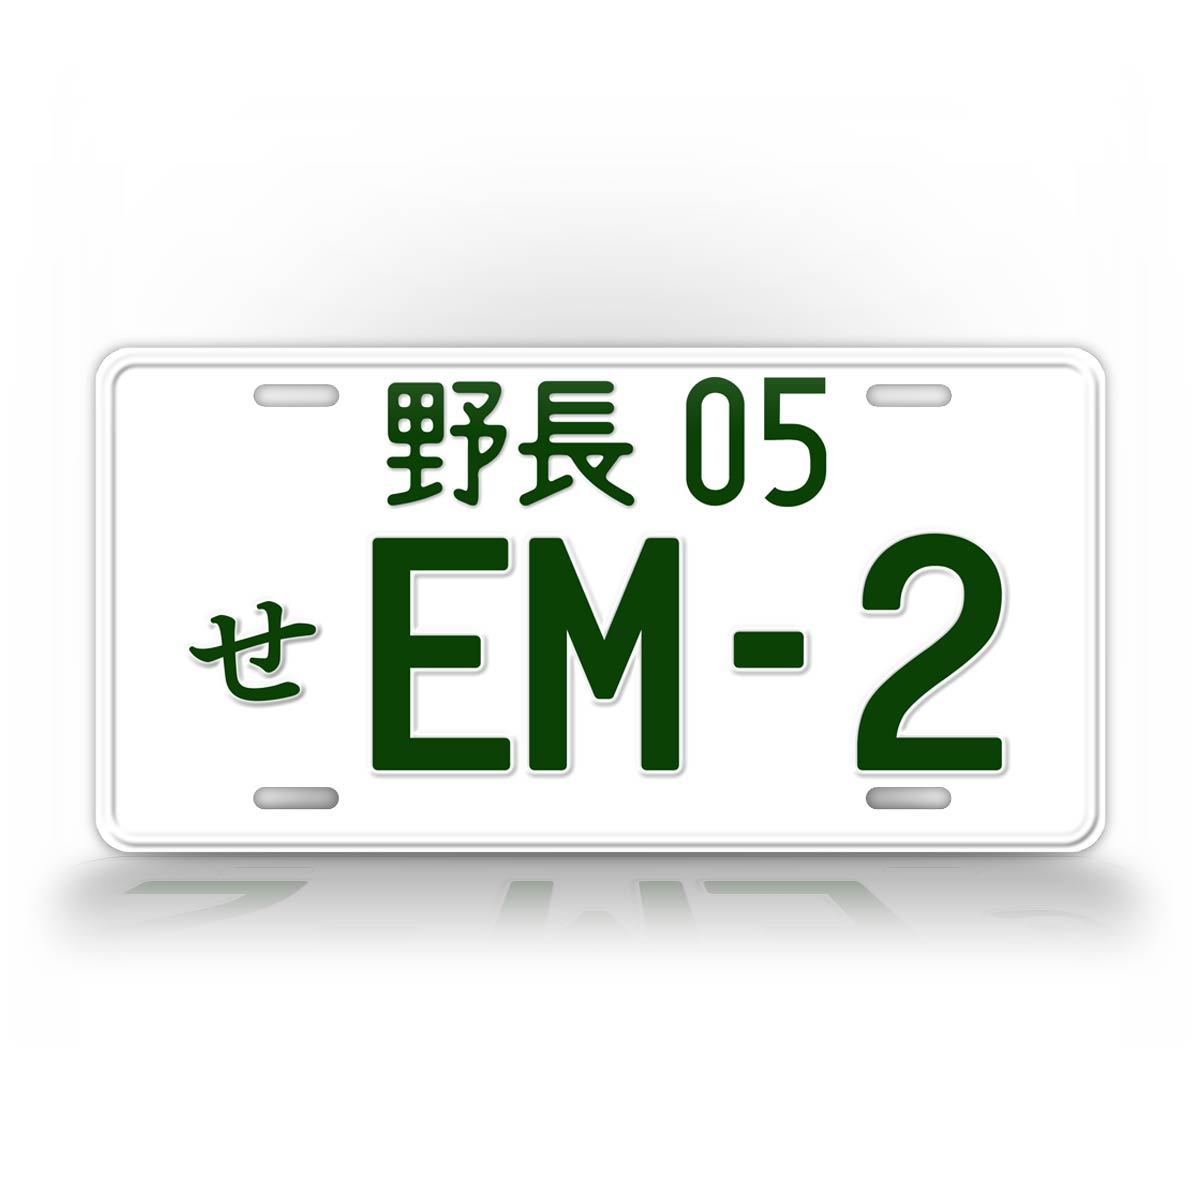 Green Japanese Honda Civic License Plate